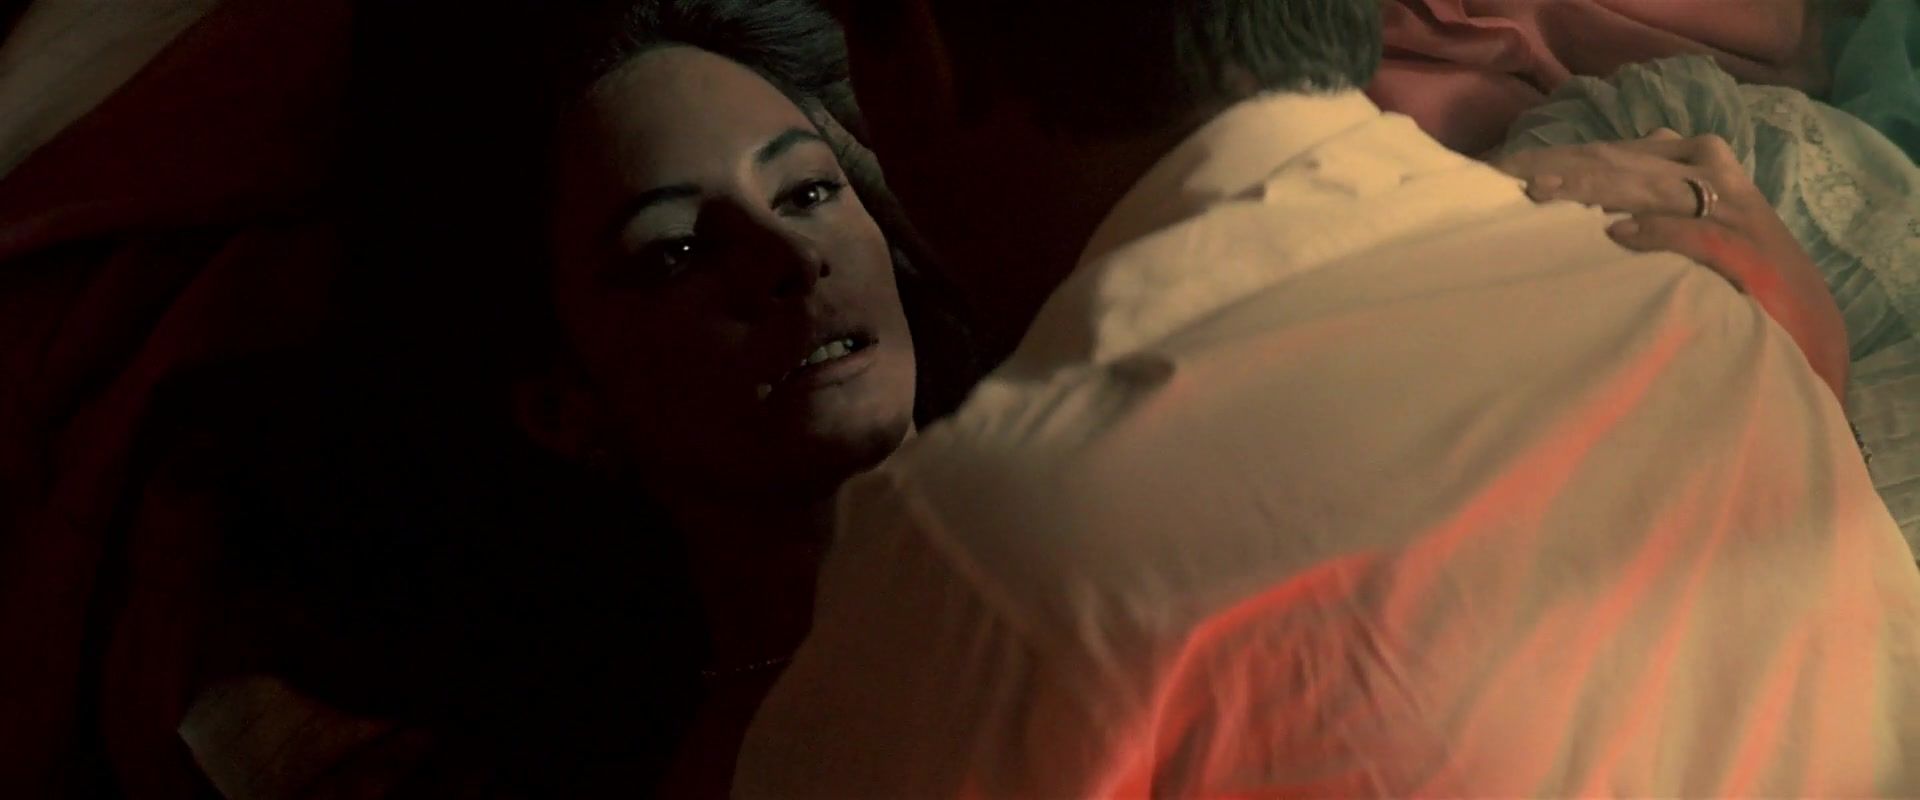 Soles Hot Scene with actress Madeleine Stowe | The movie "Revenge" BestSexWebcam - 2